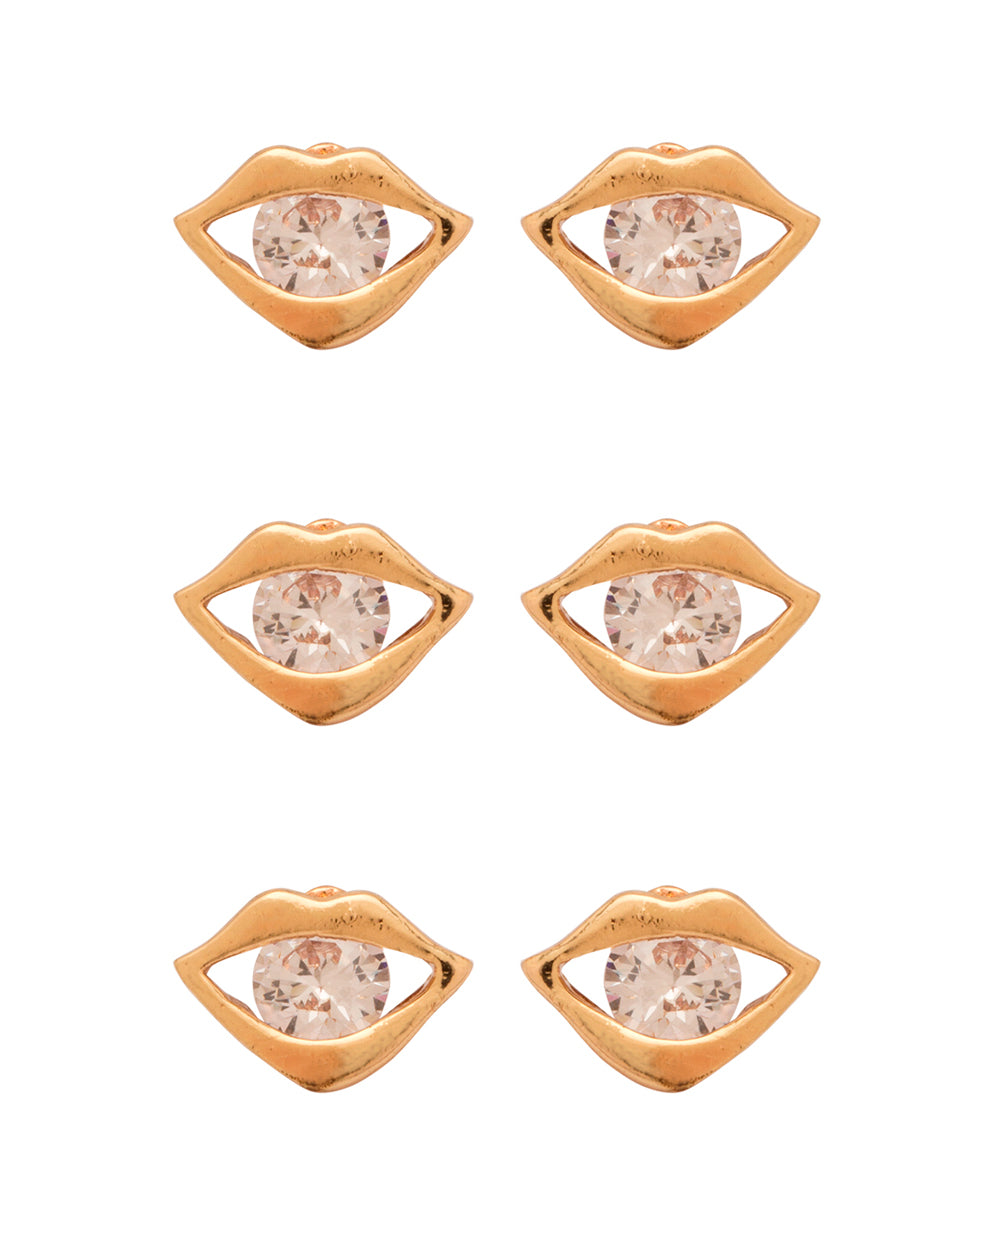 Pack of 3 Stud Earrings In Lips Shape Design